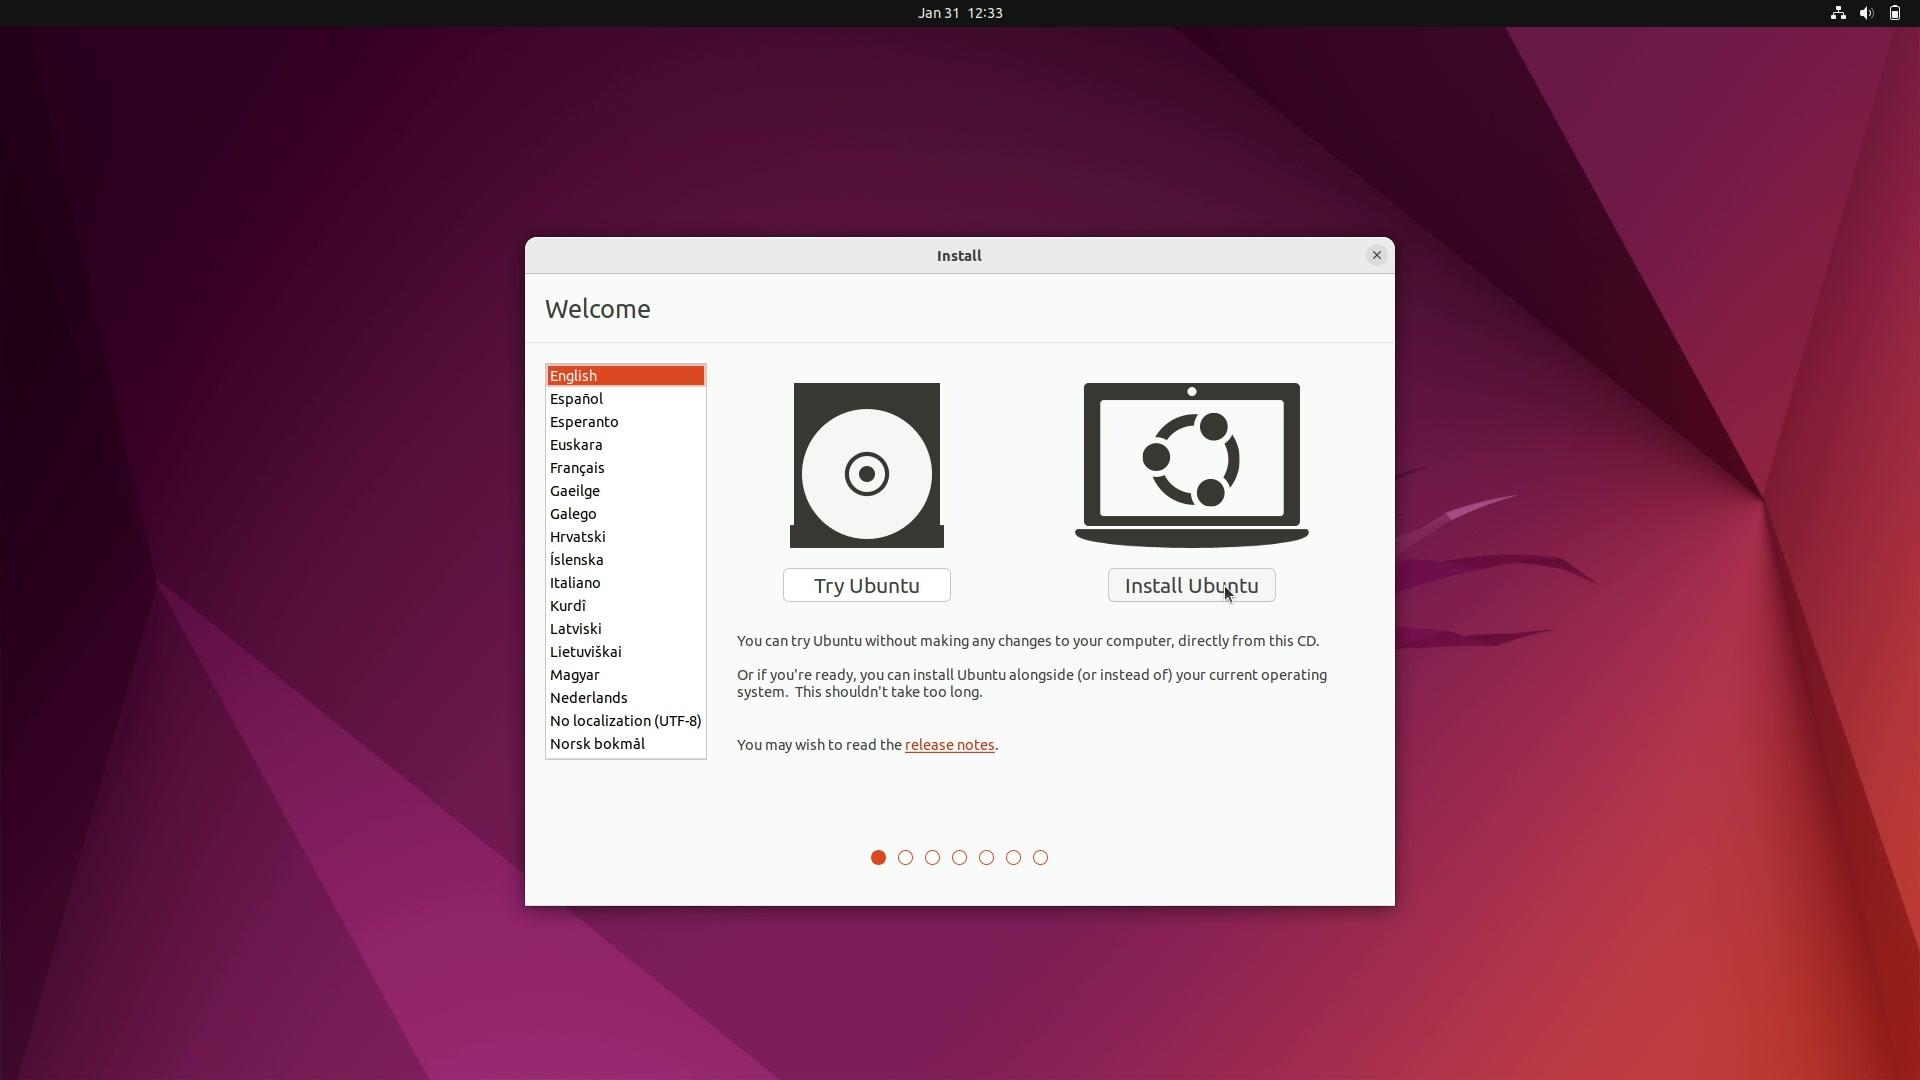 Install Ubuntu